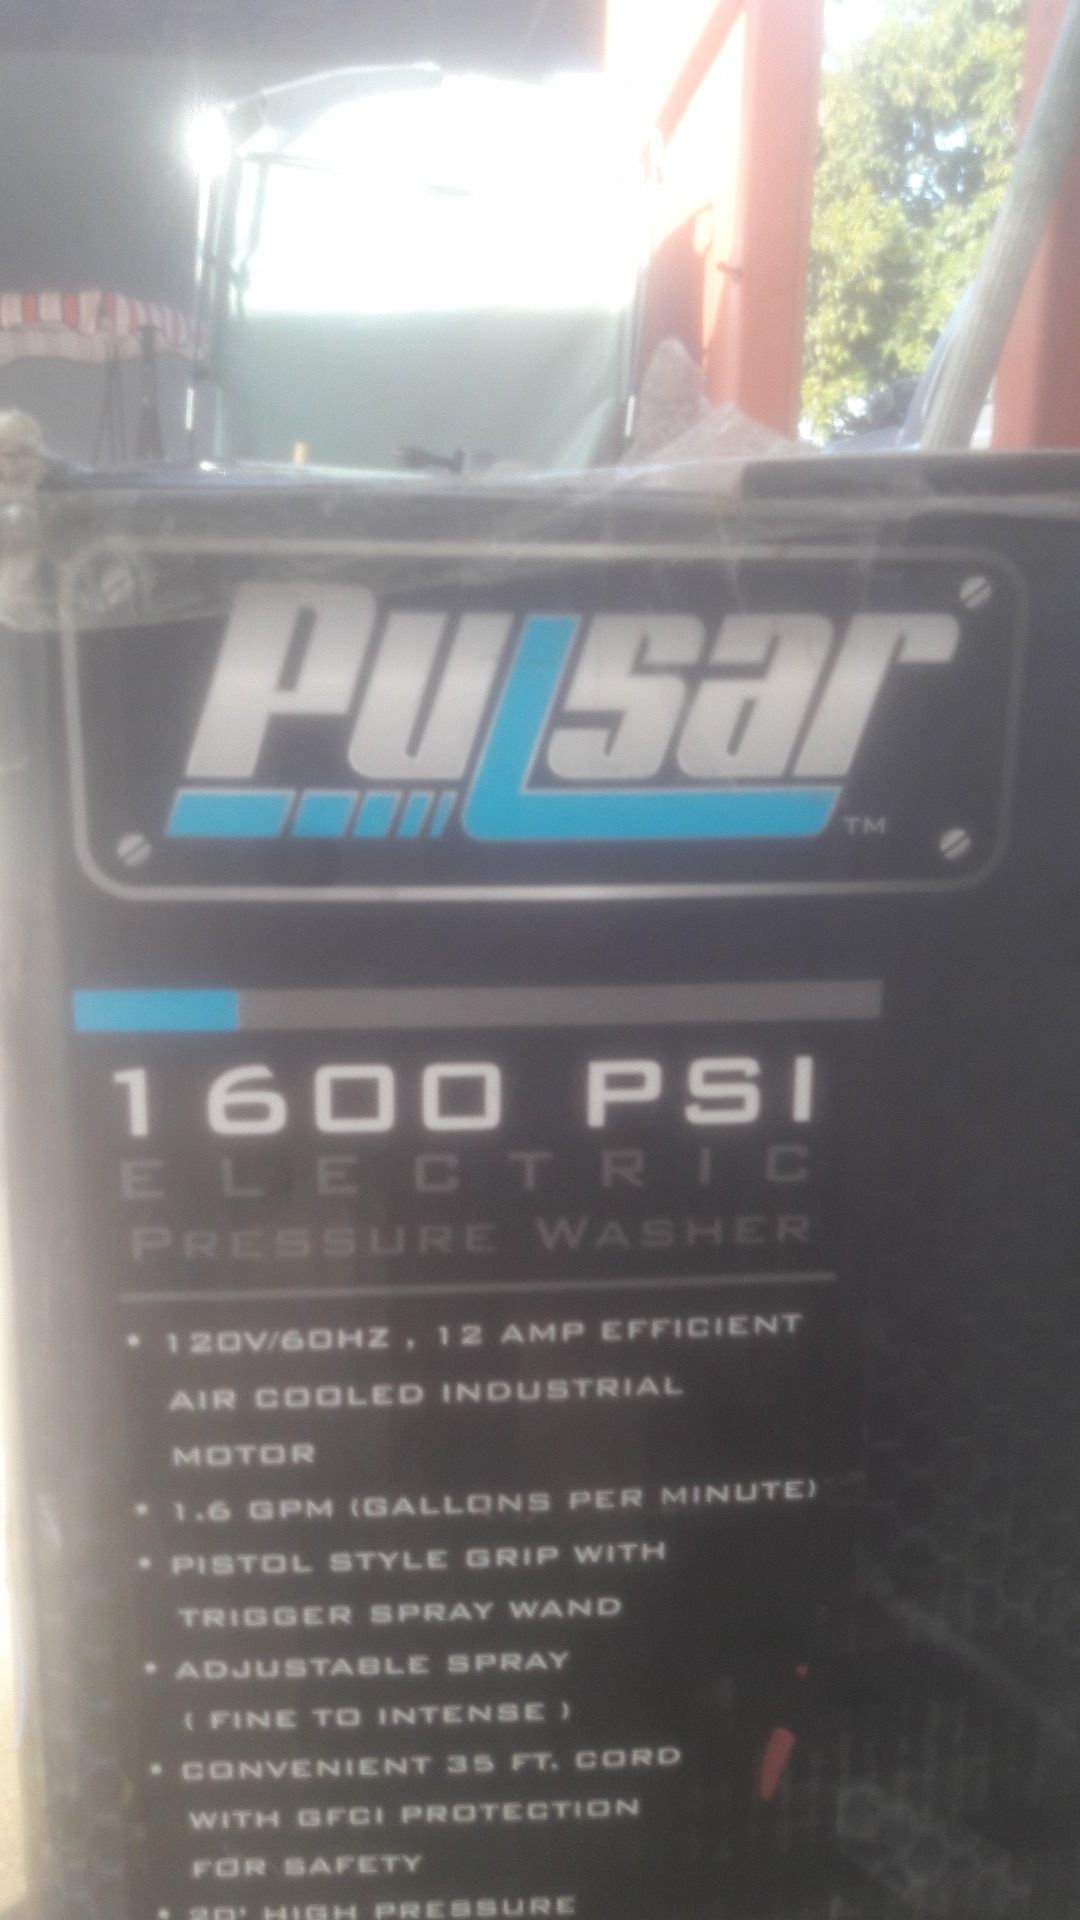 Pulsar 1600 pressure washer